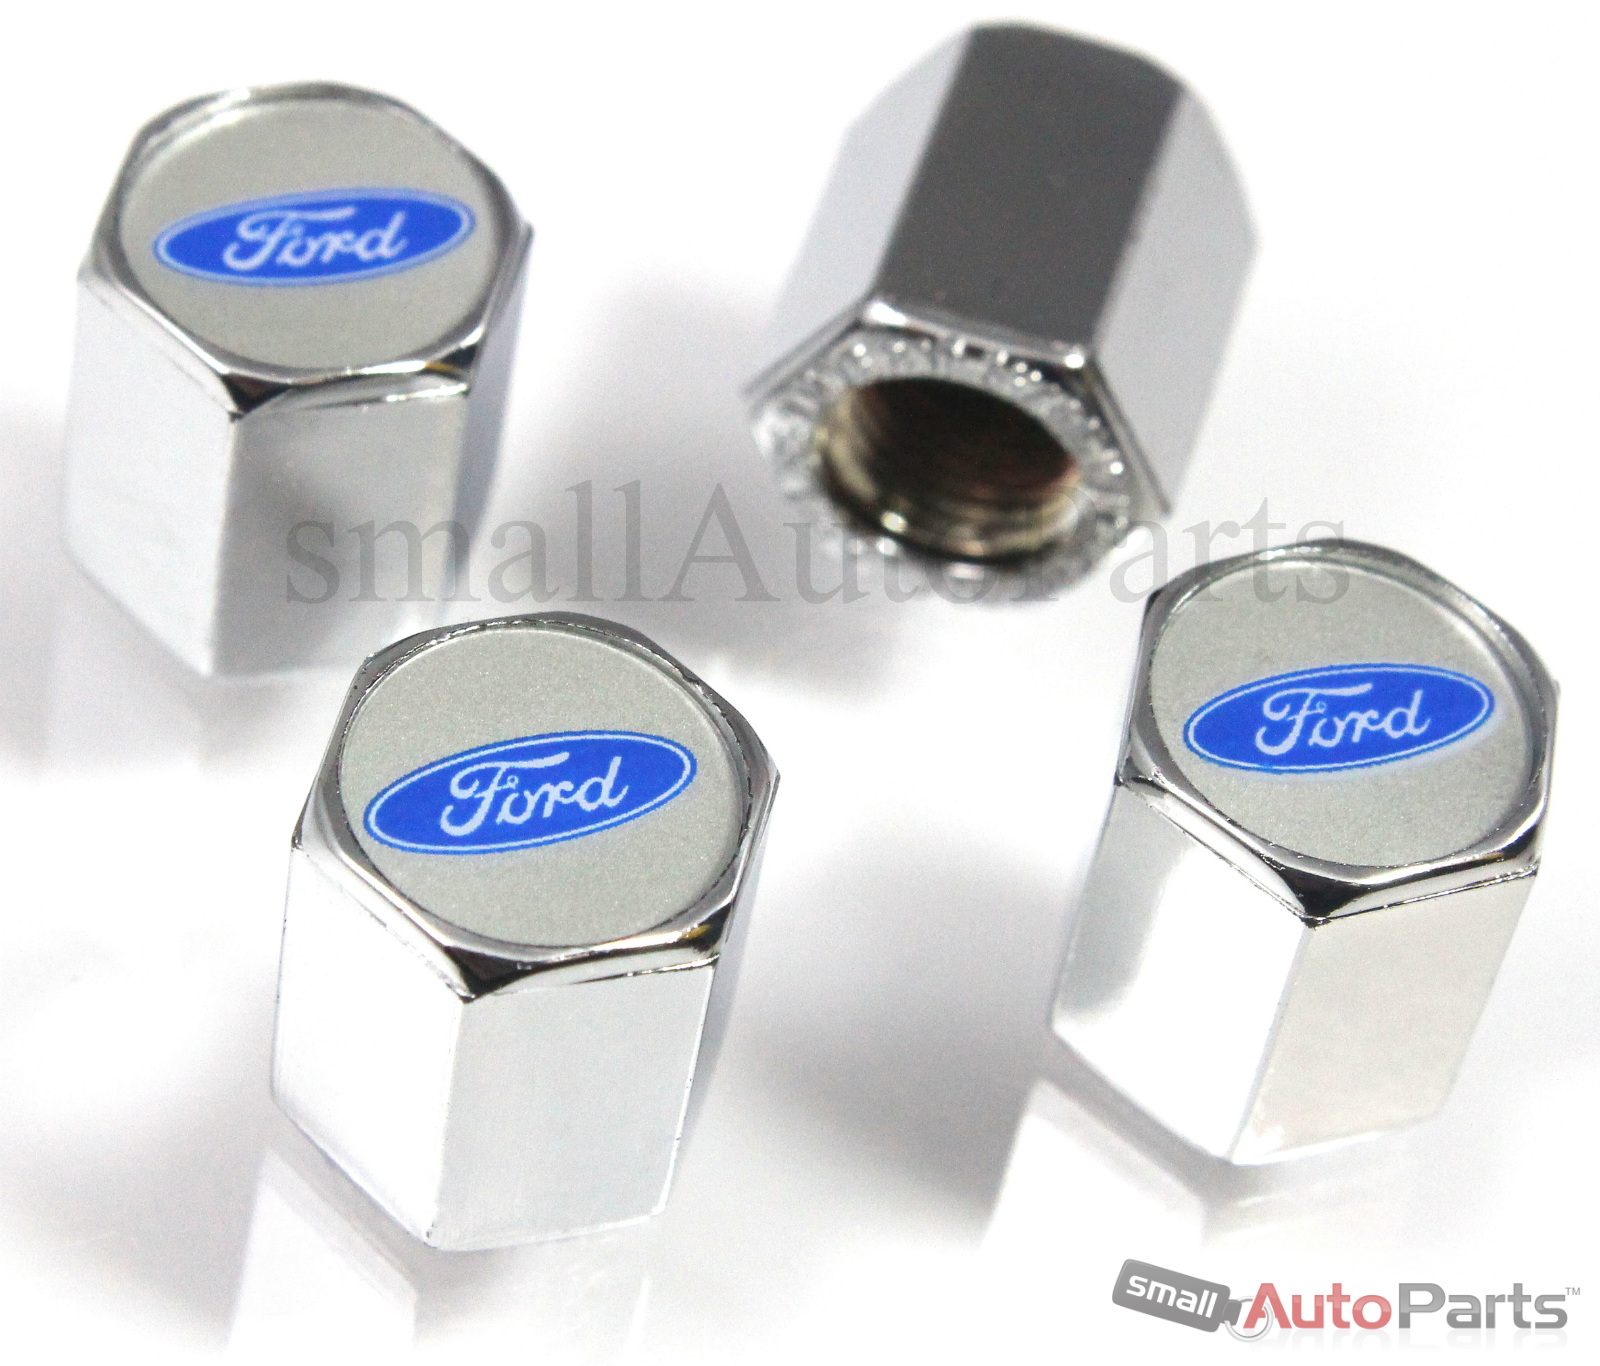 Ford blue logo chrome tire stem valve caps #9